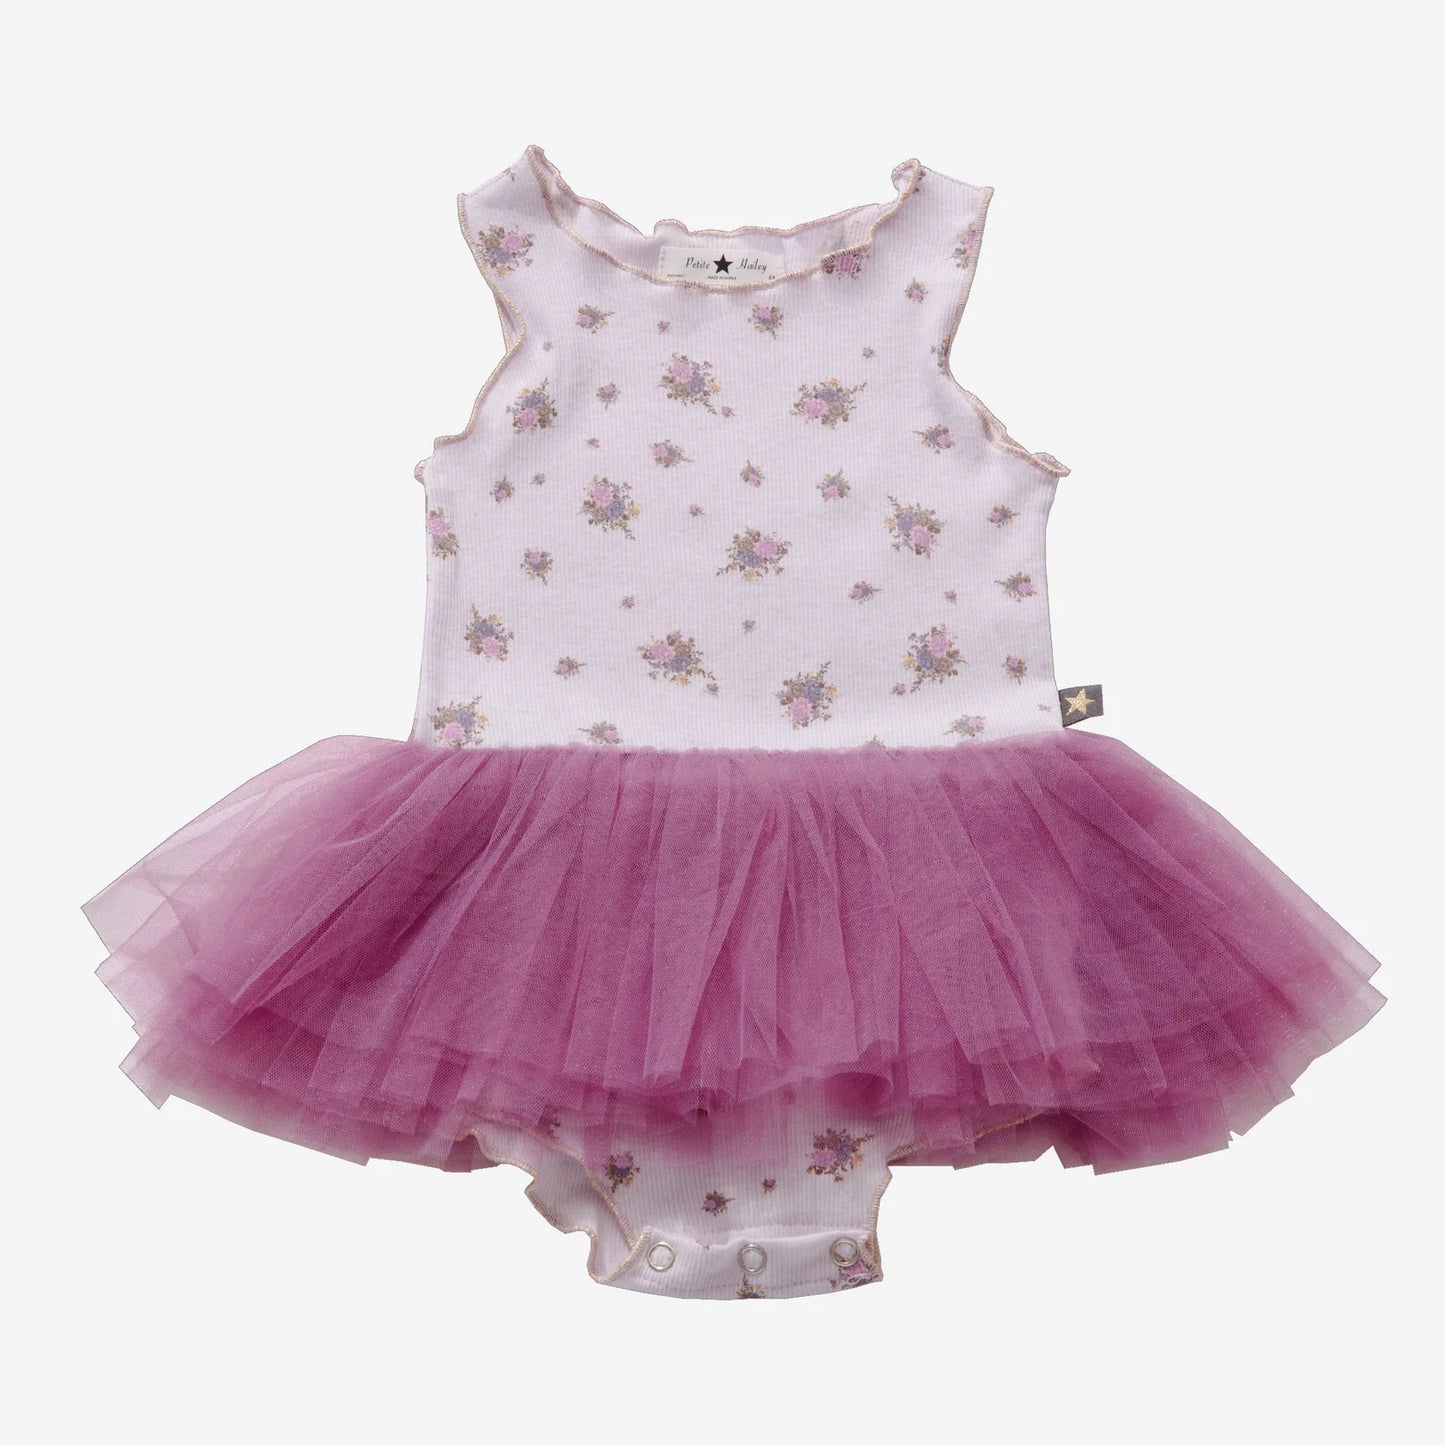 Lily Purple Tutu Dress